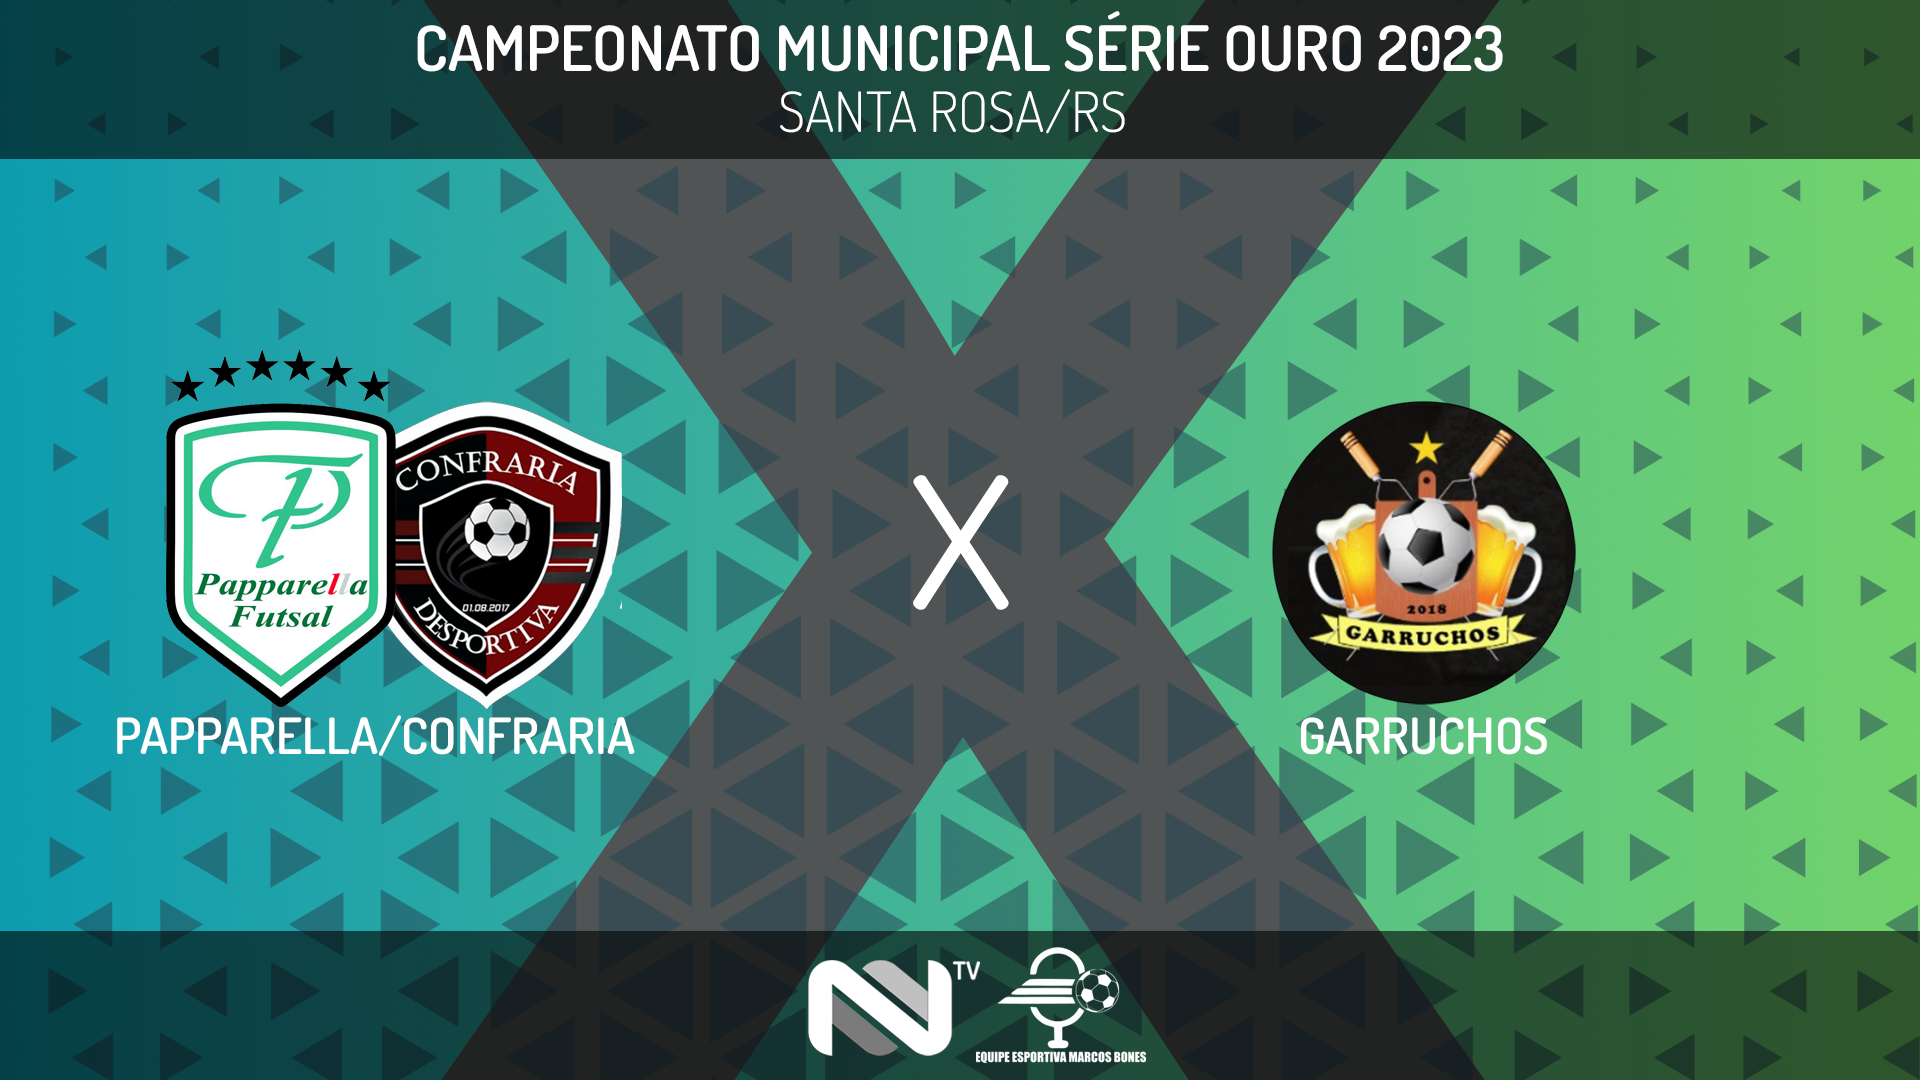 Campeonato Municipal de Futsal Série Ouro 2023 de Santa Rosa/RS